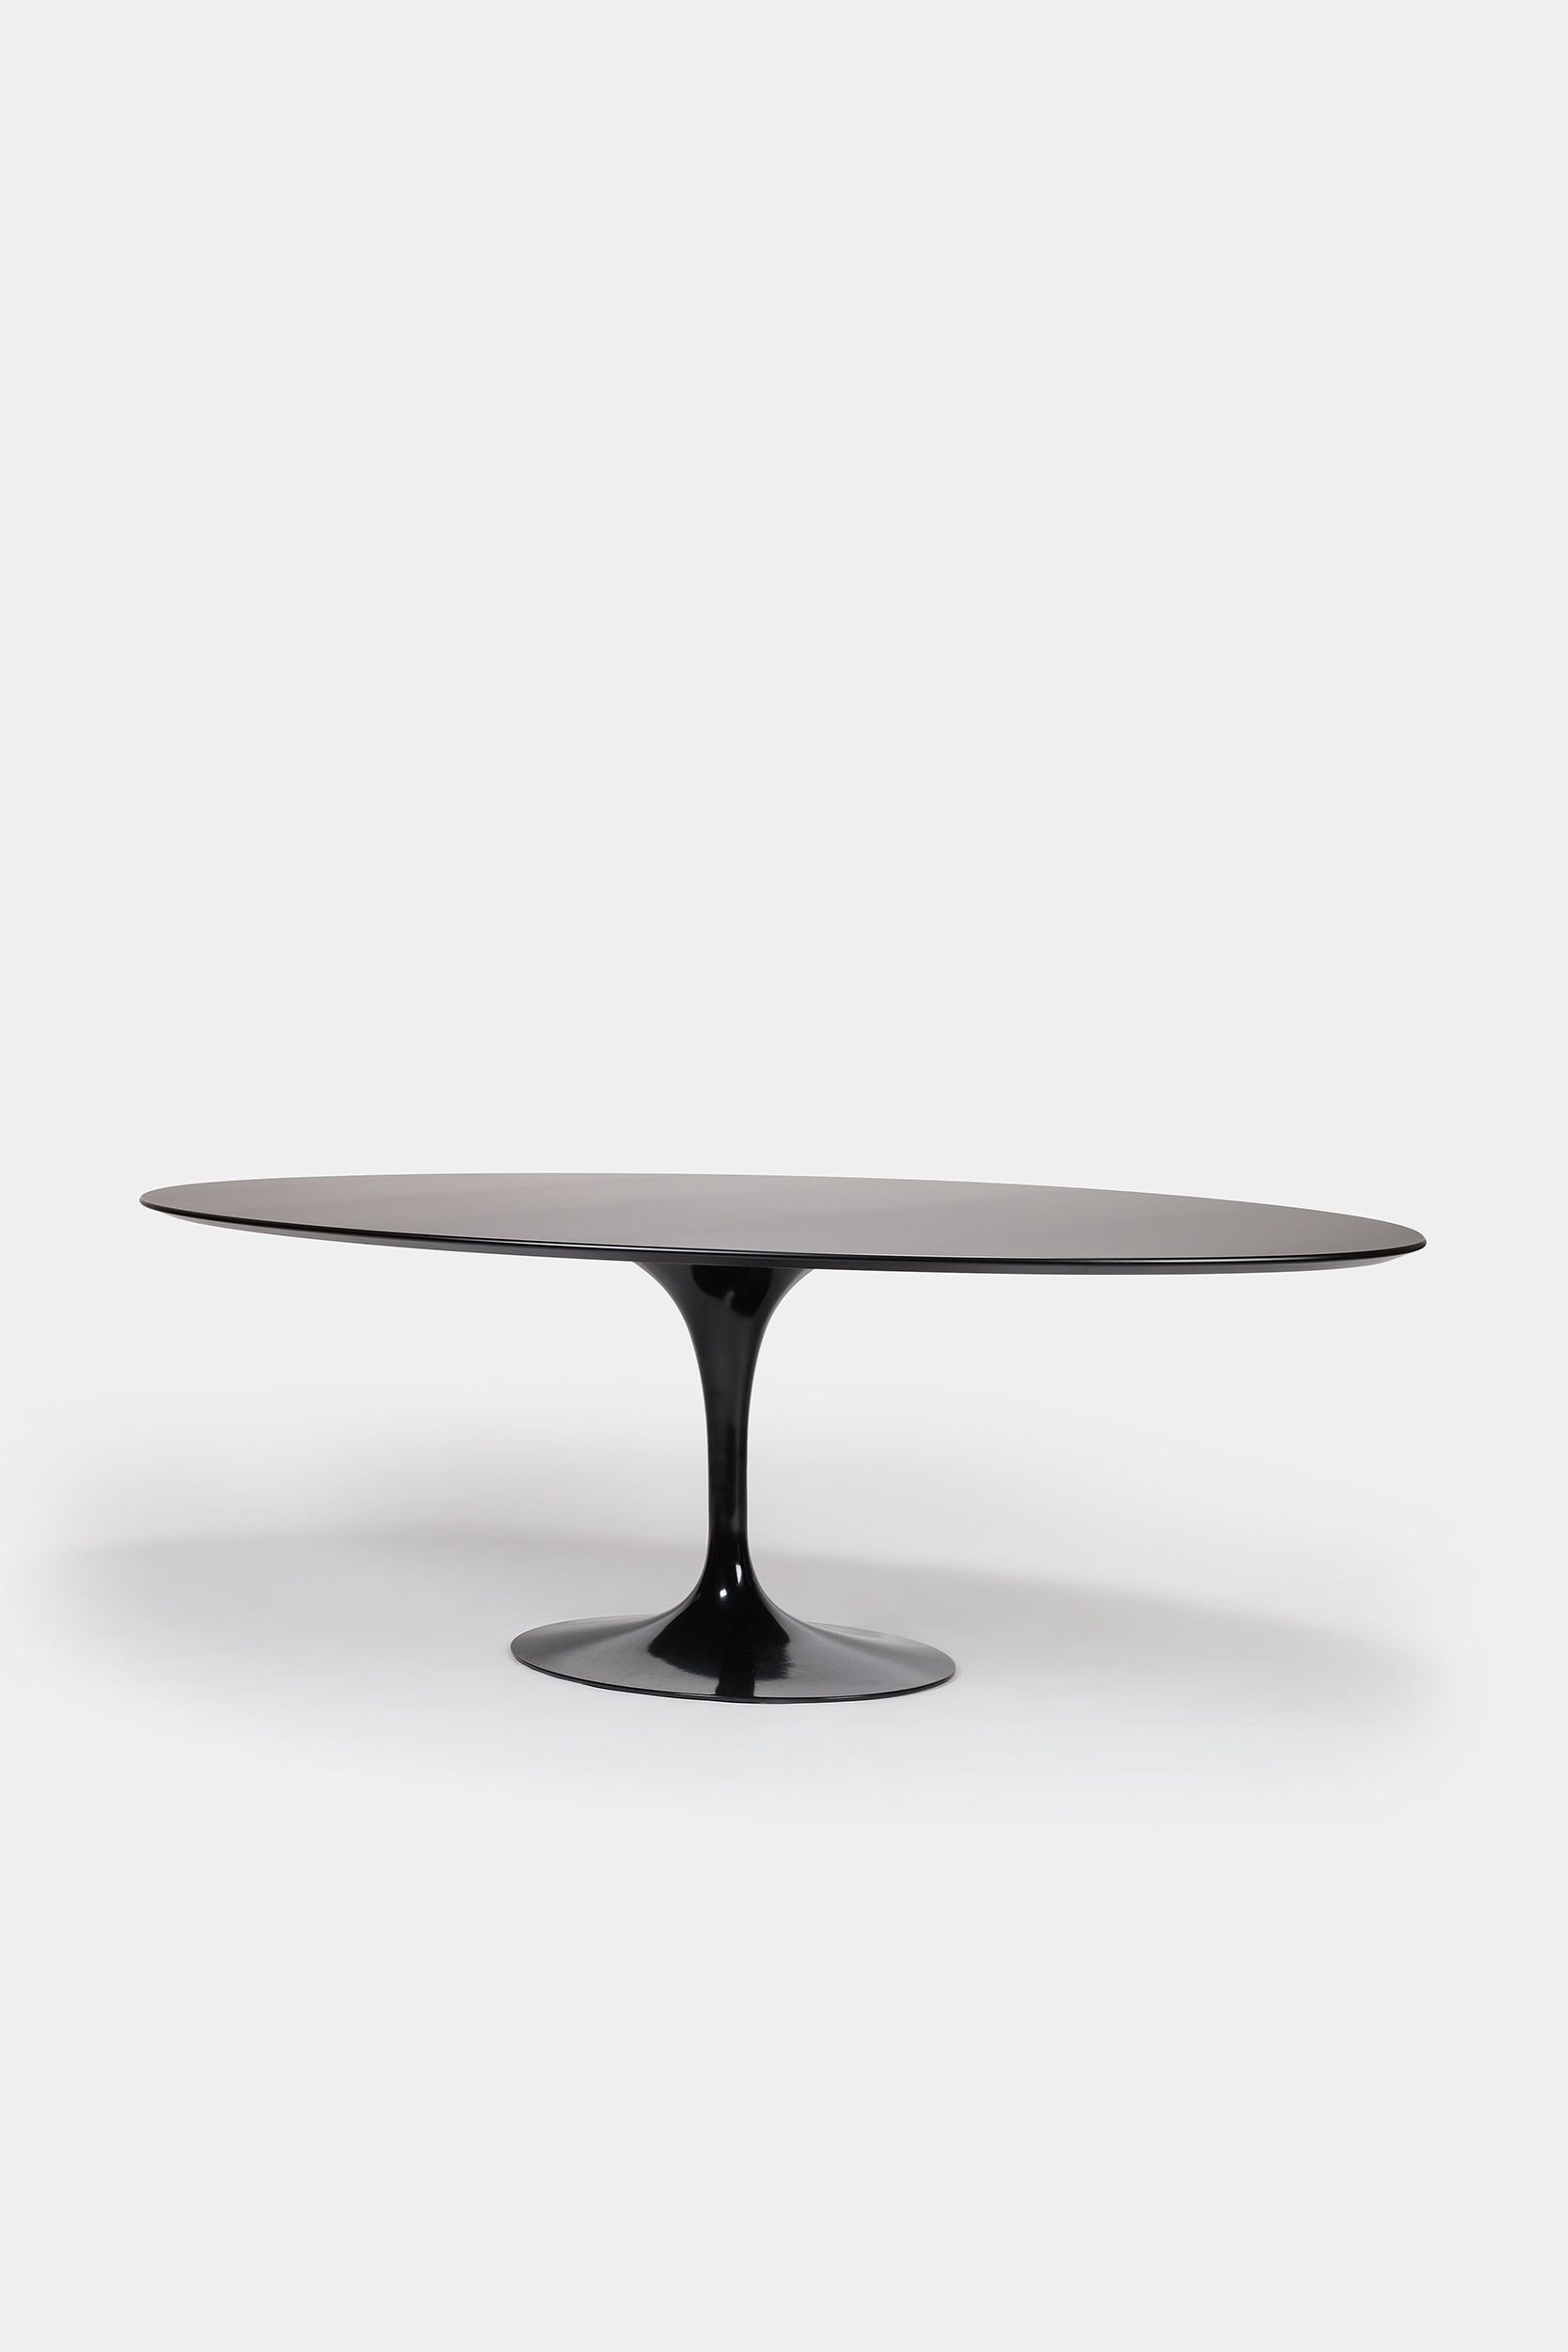 Eero Saarinen, Tulip Table Oval XXL, Knoll International, 50s